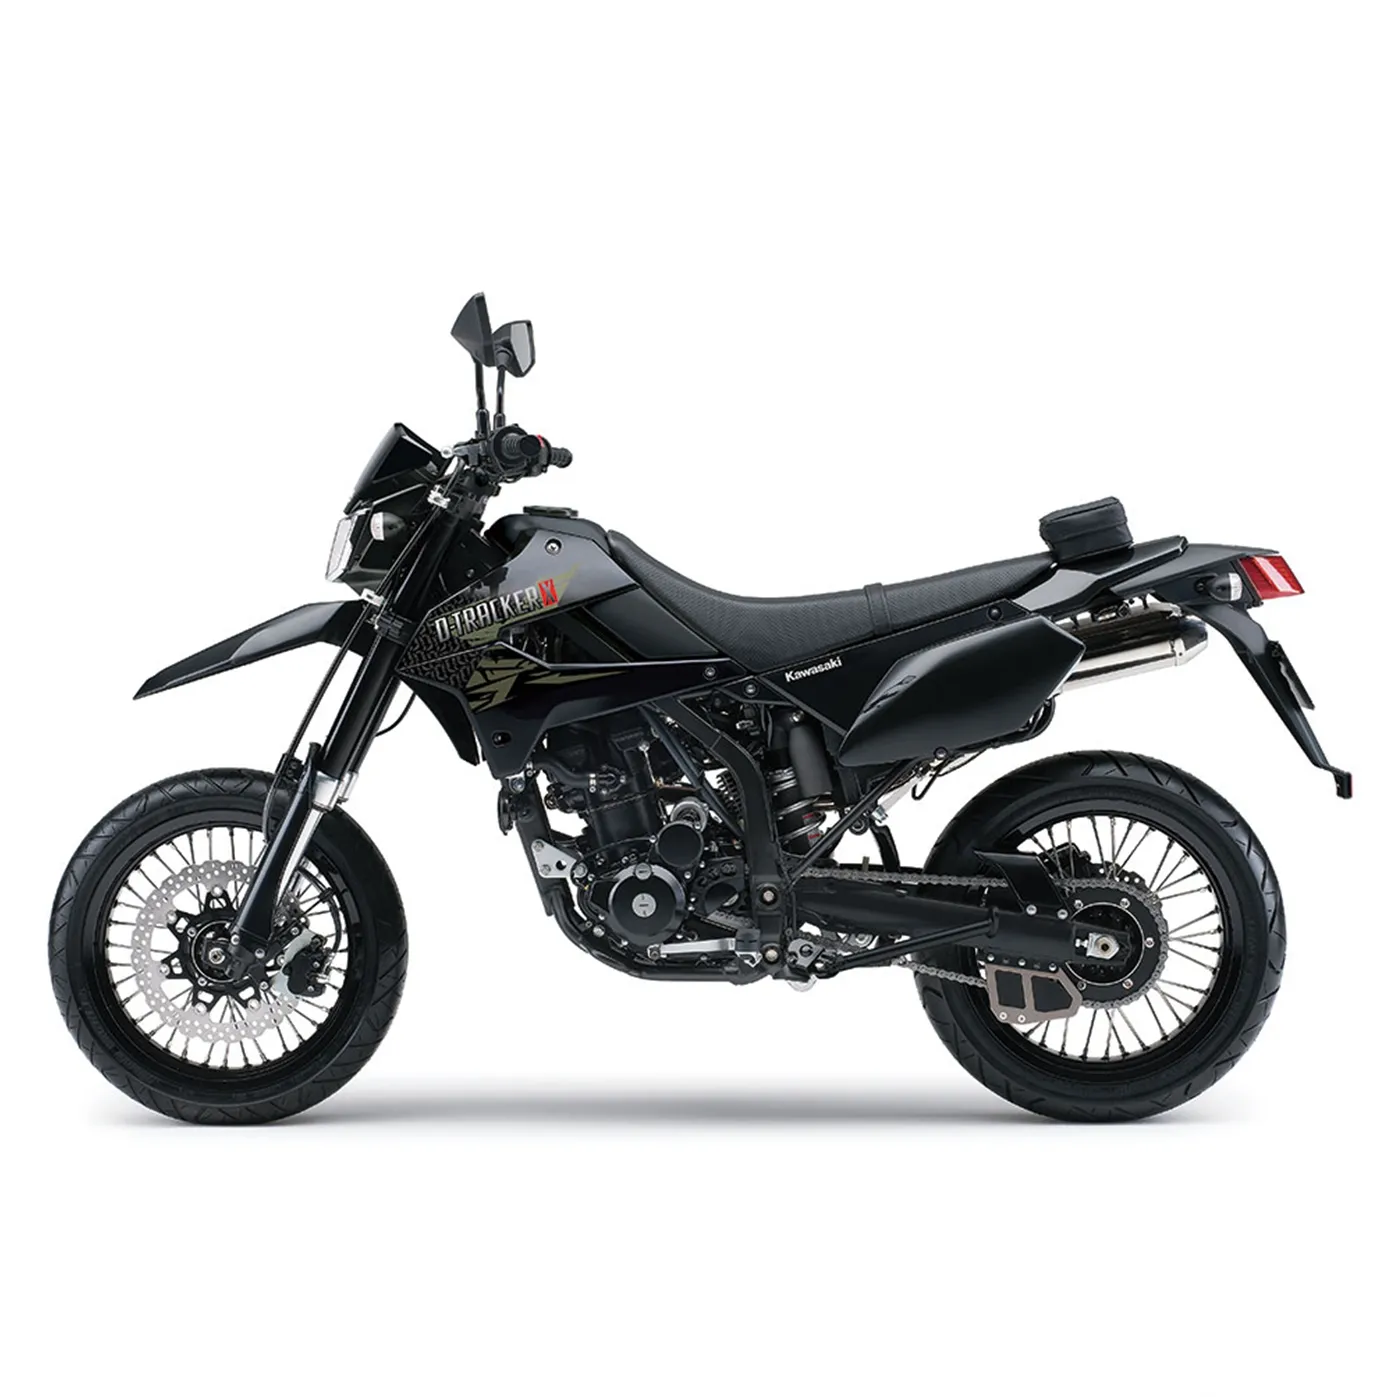 Nagelneu Indonesien Kawasaki D-Tracker X150 Dirtbike Motorräder